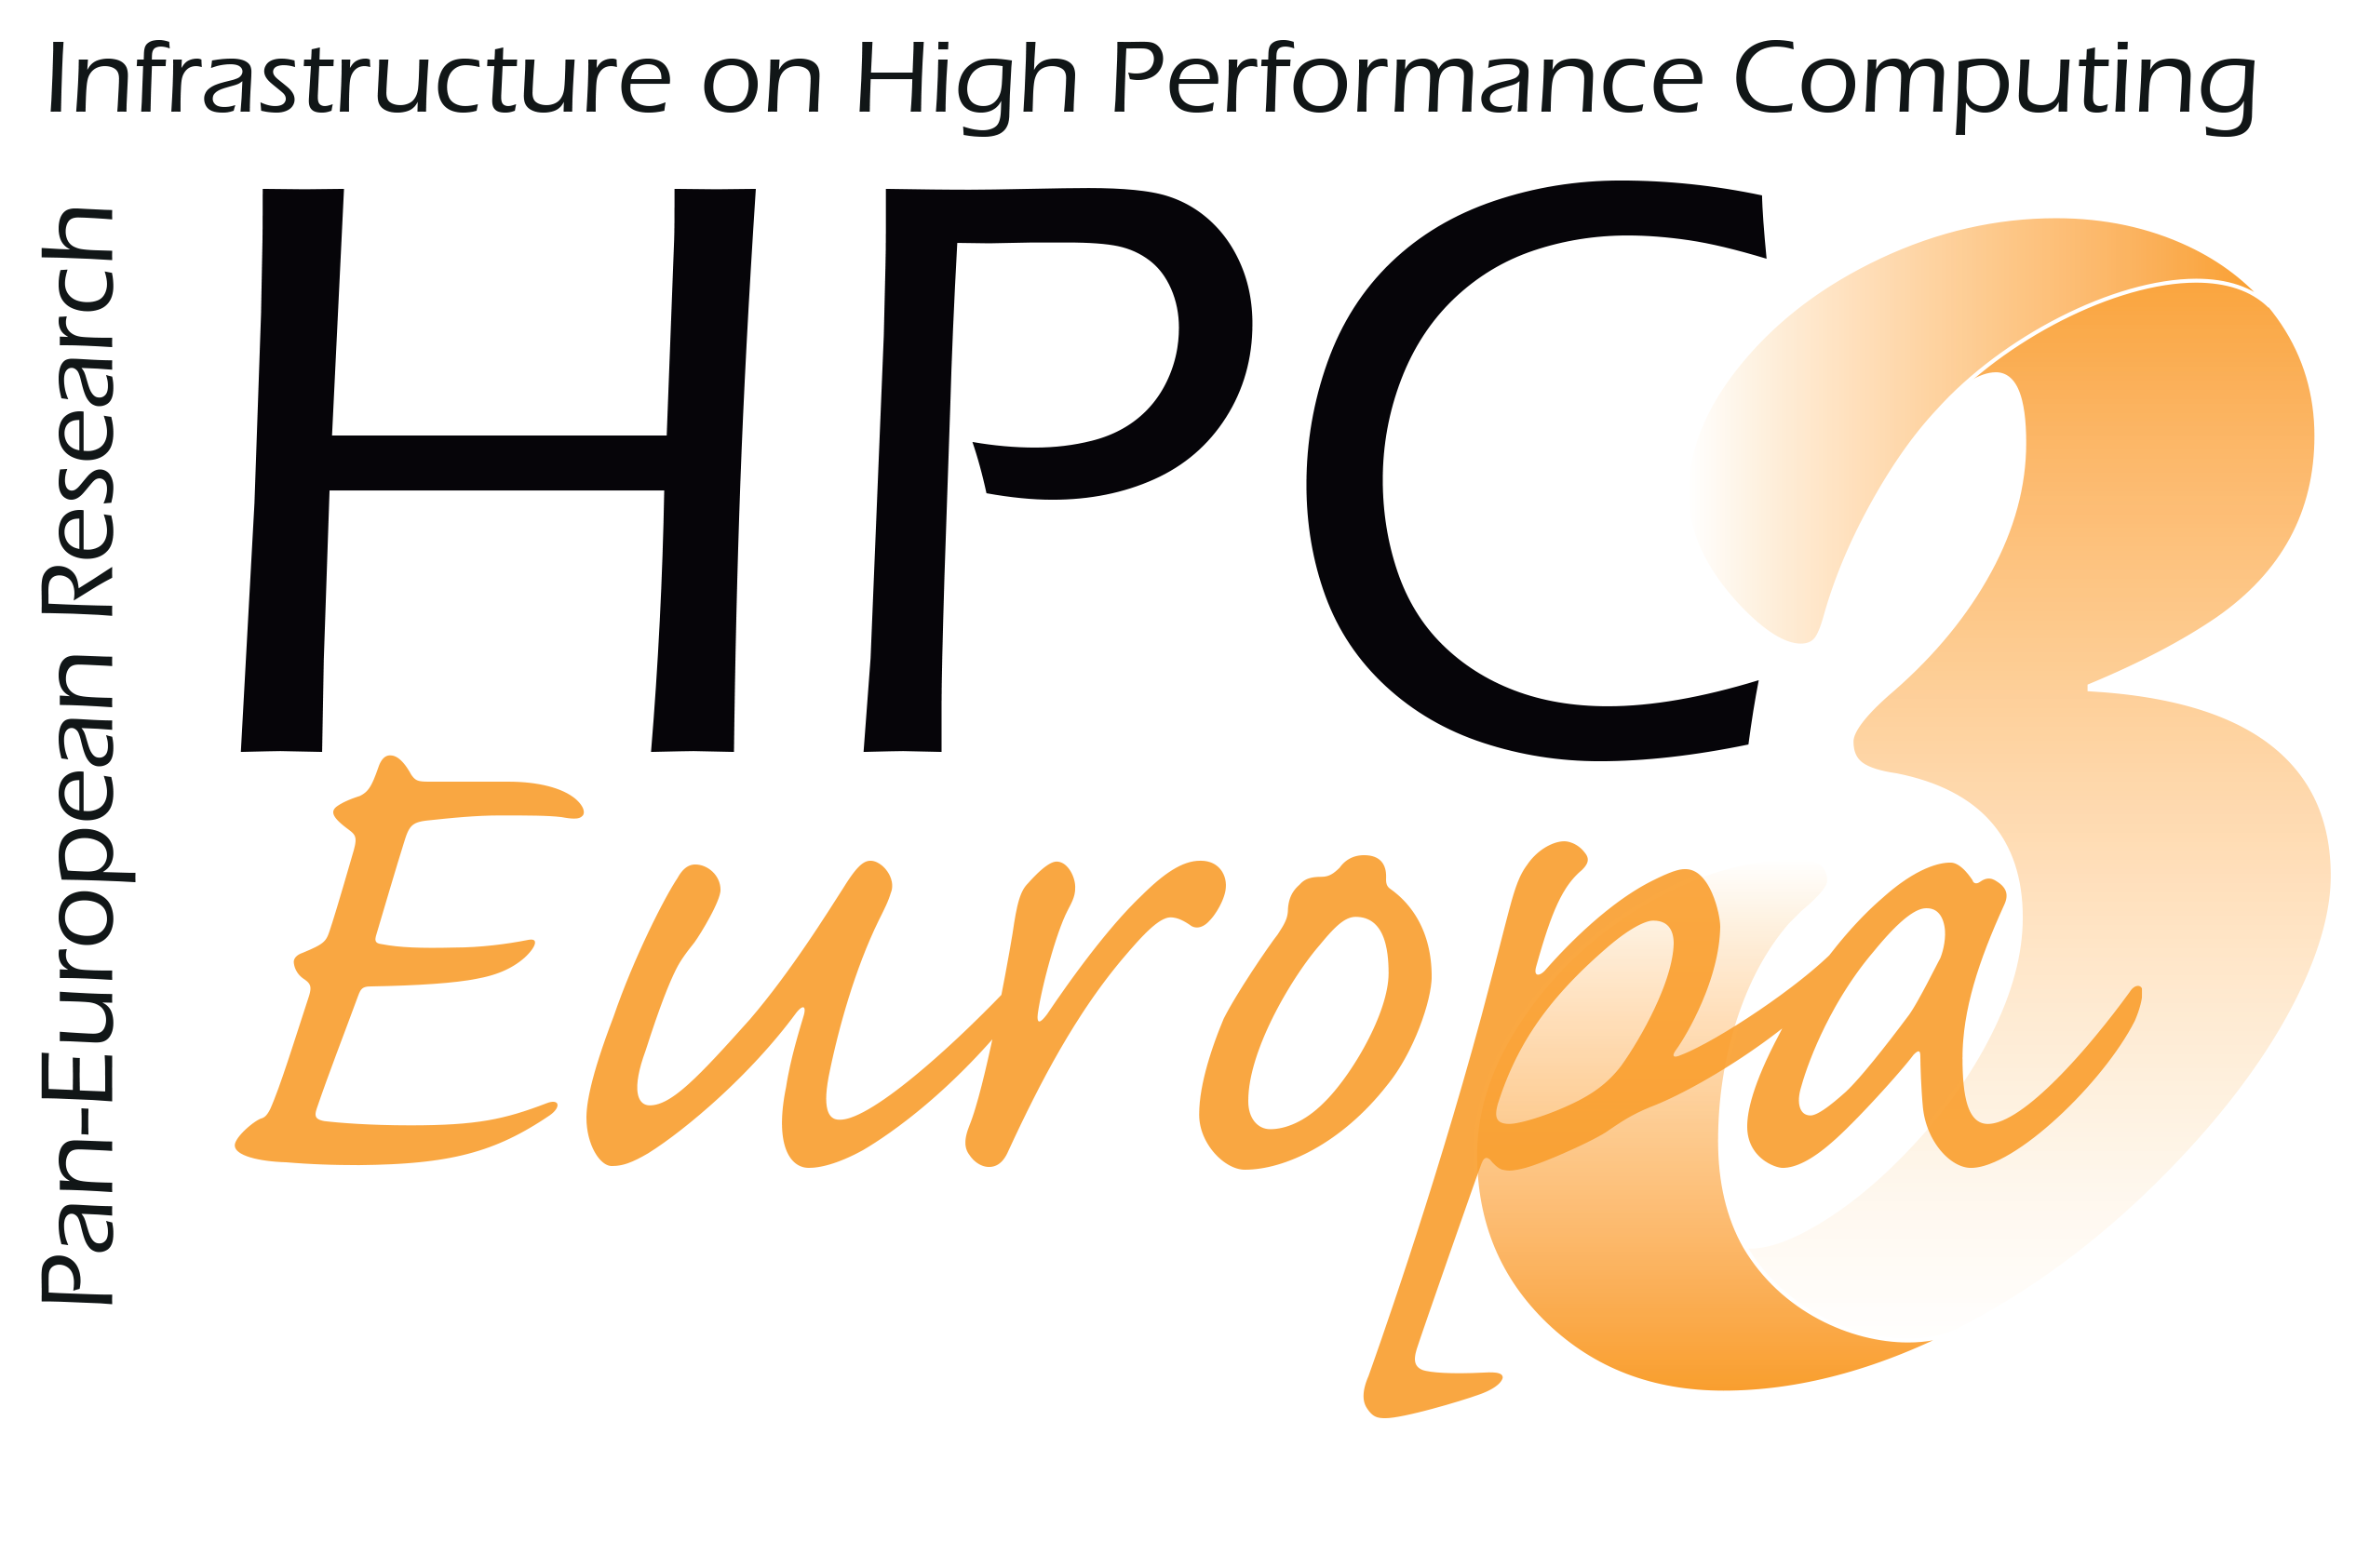 HPC-Europa3 Logo